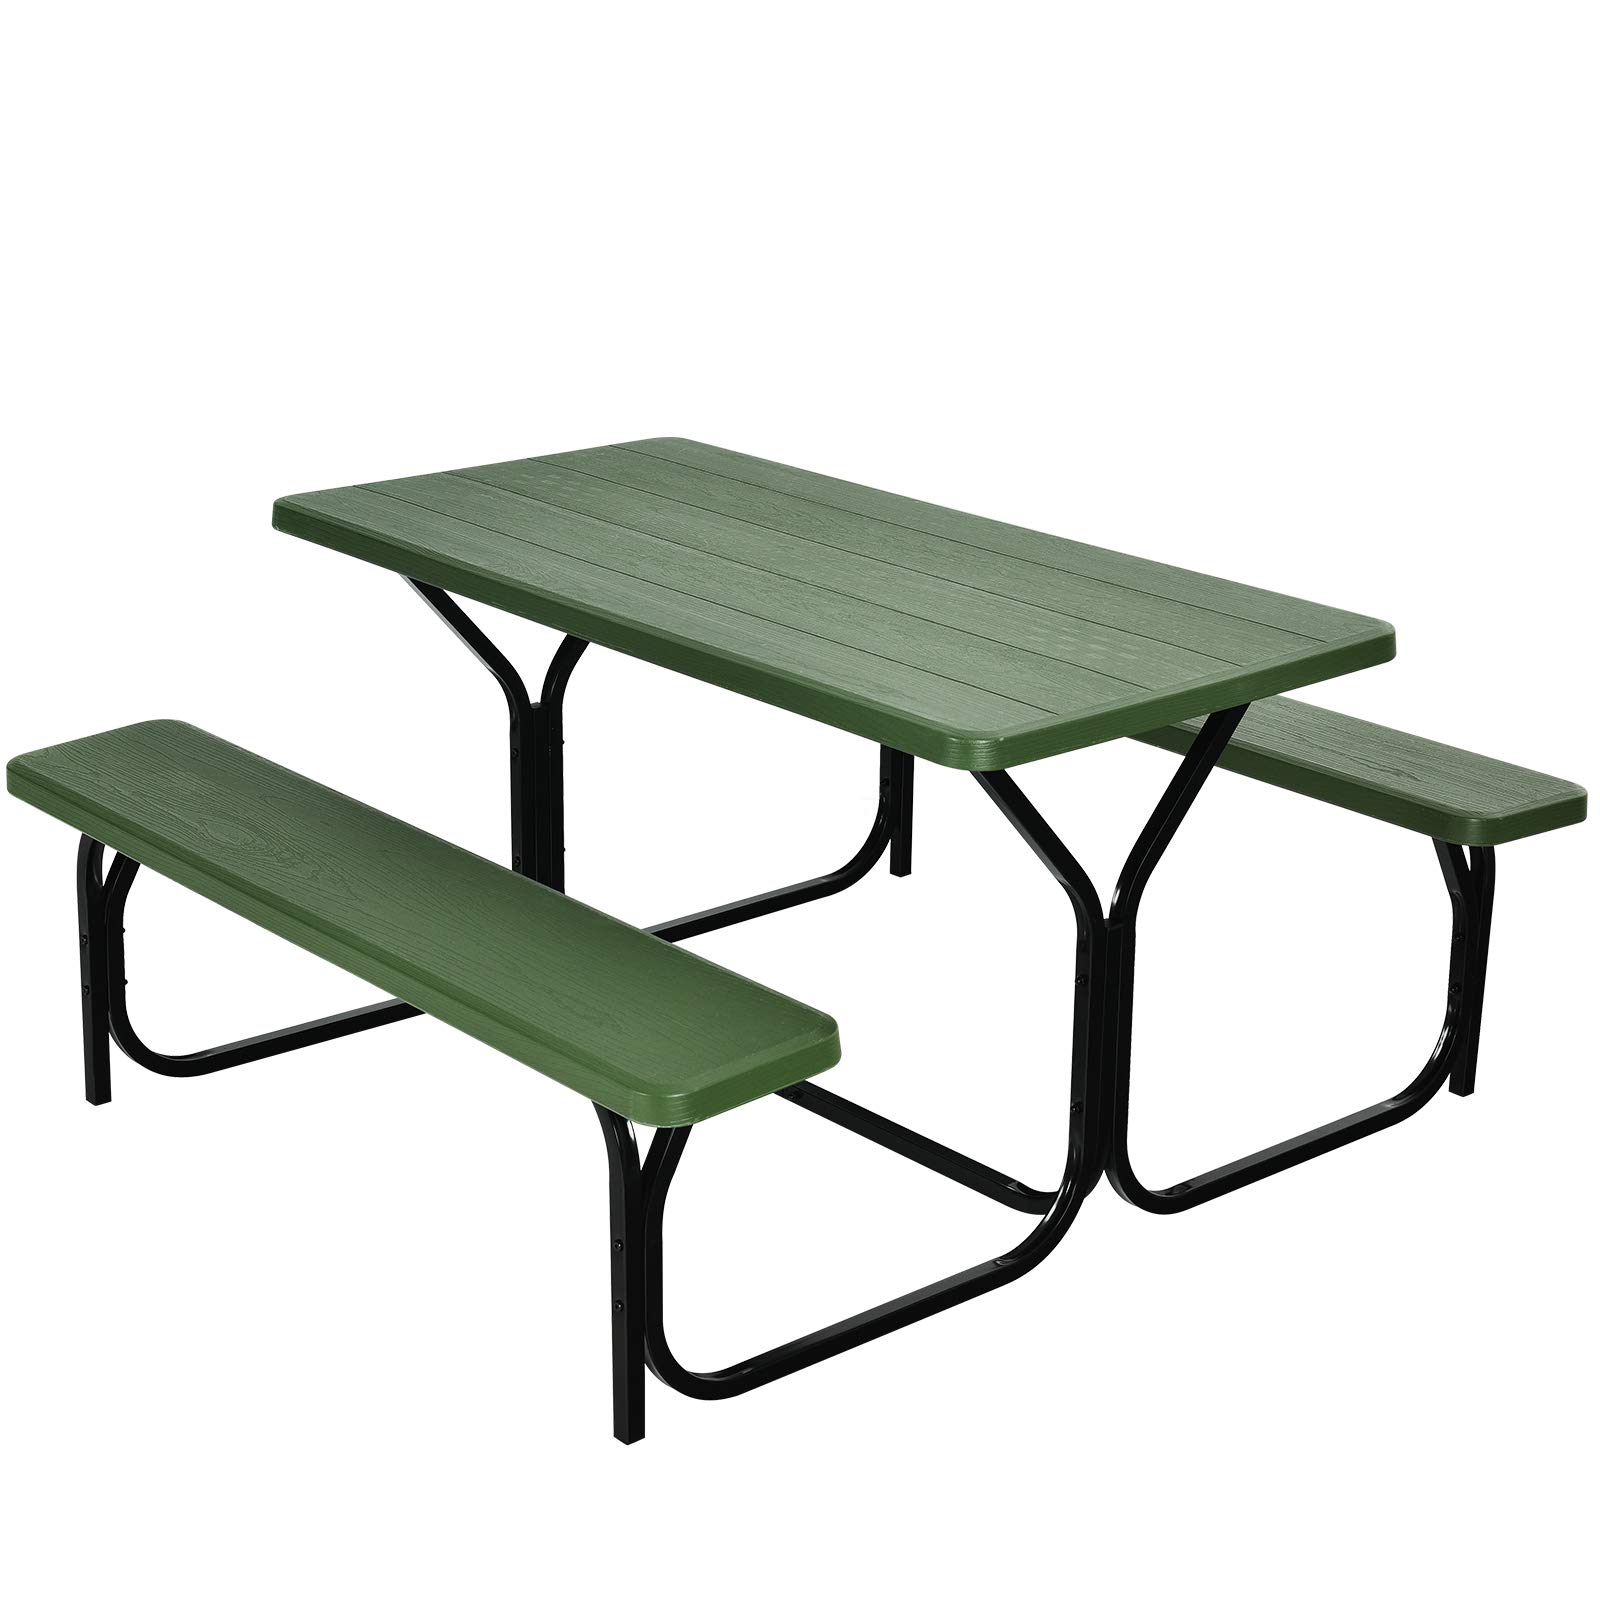 Giantex Picnic Table Bench Set for Outdoor Camping